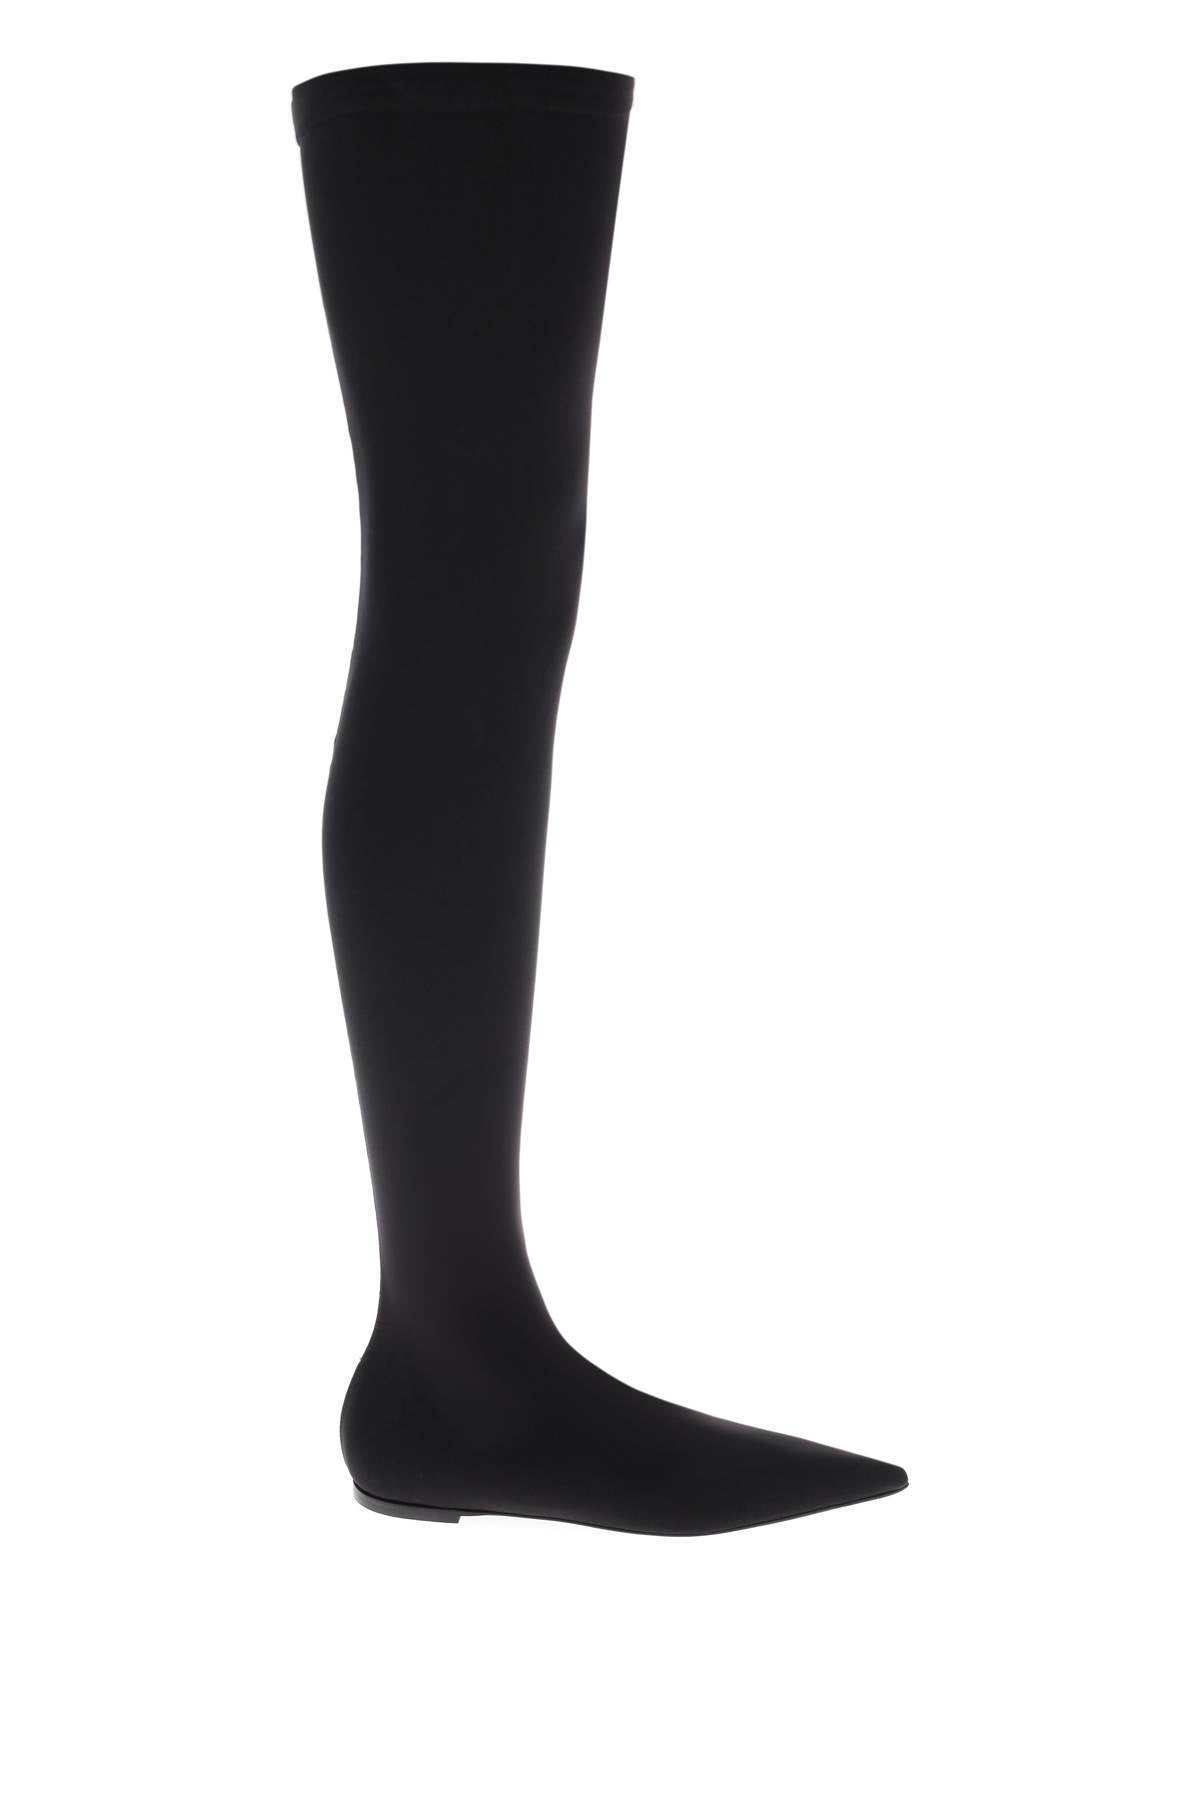 DOLCE & GABBANA Versatile Black Stretch Thigh-High Boots for Women